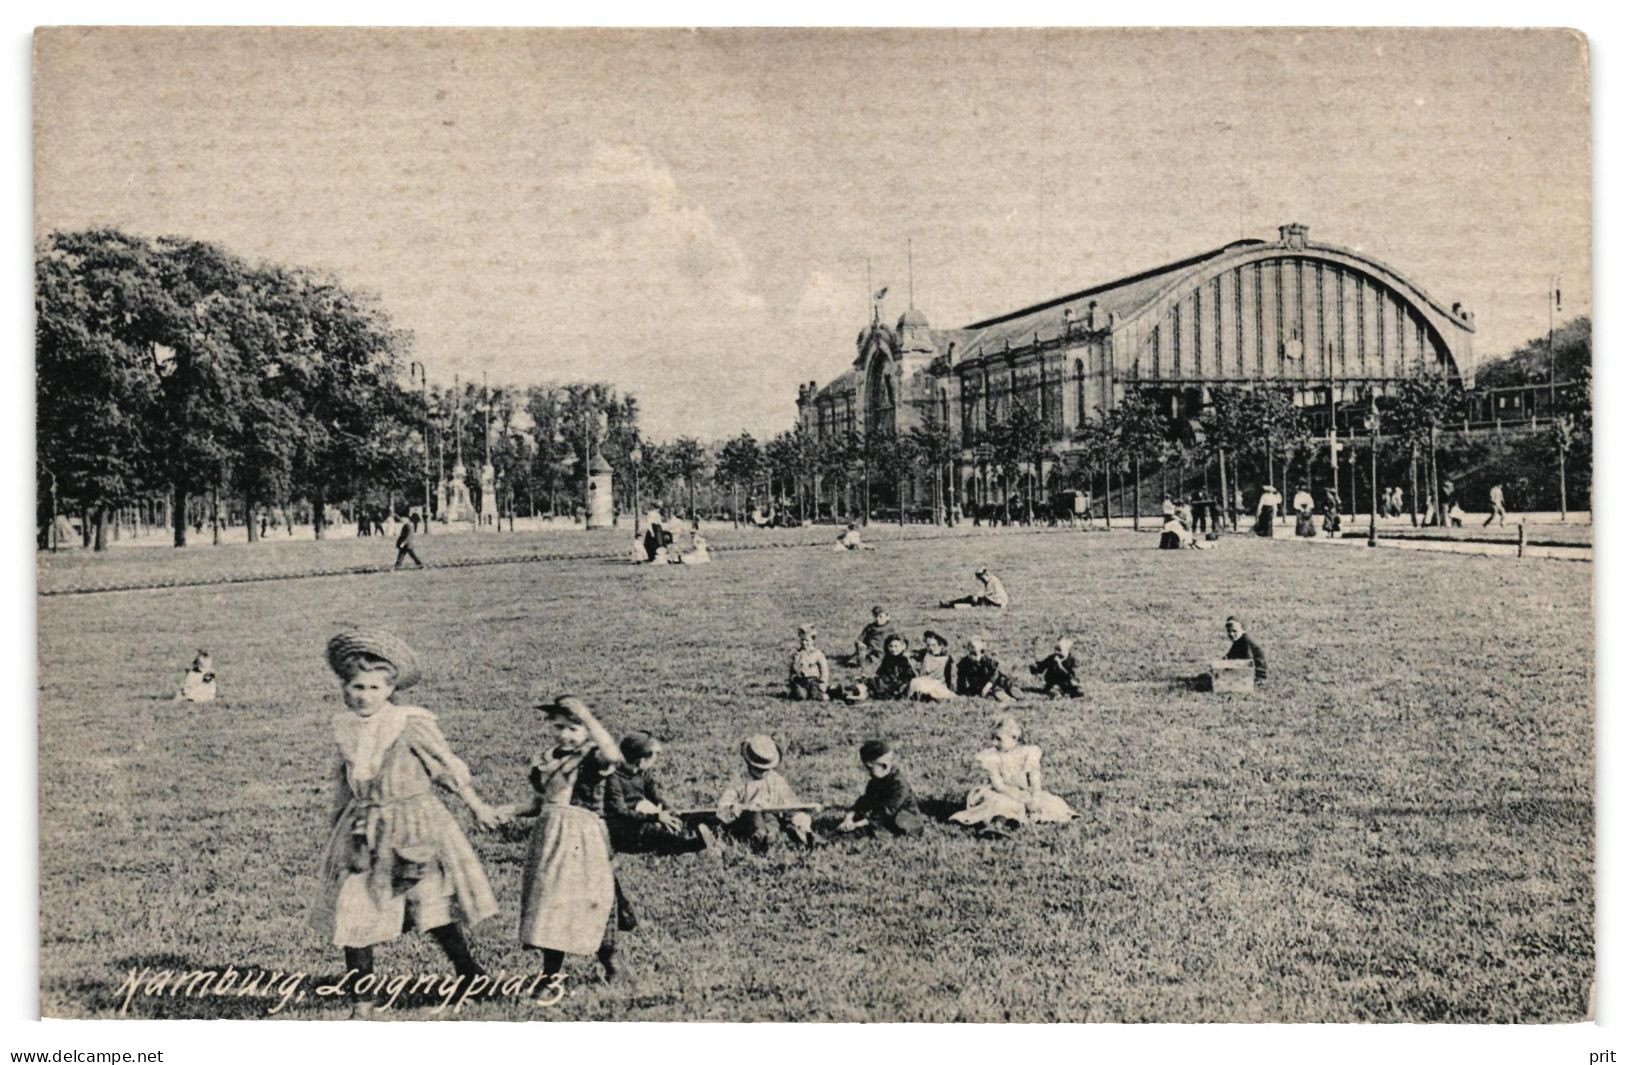 Loignyplatz Hamburg Children On The Grass 1906 Unused Real Photo Postcard. Publisher Dr Trnkler Co Hamburg - Eimsbuettel